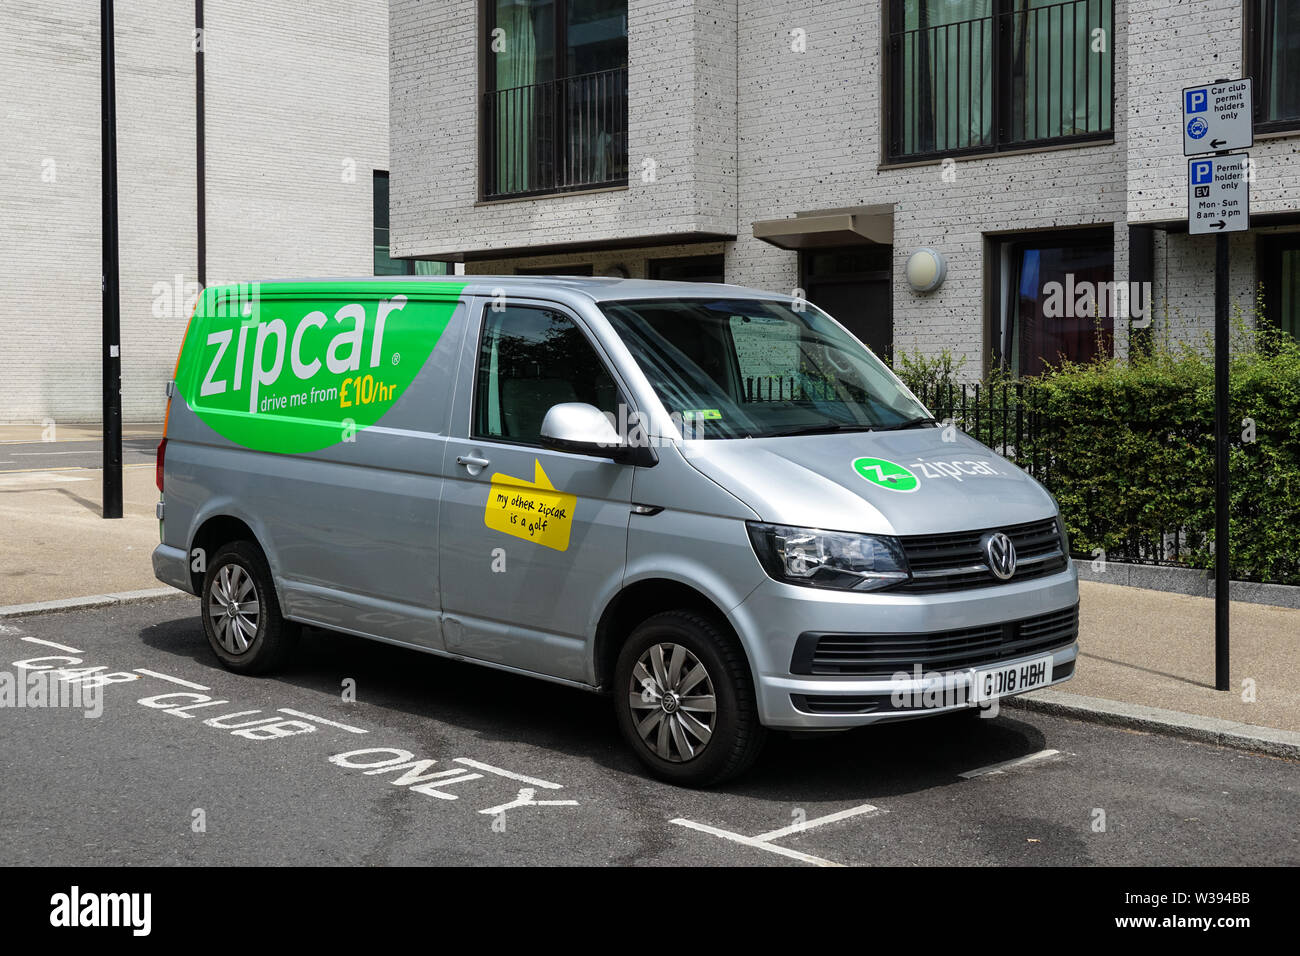 Zipcar van on residential street in London, England United Kingdom UK Stock Photo